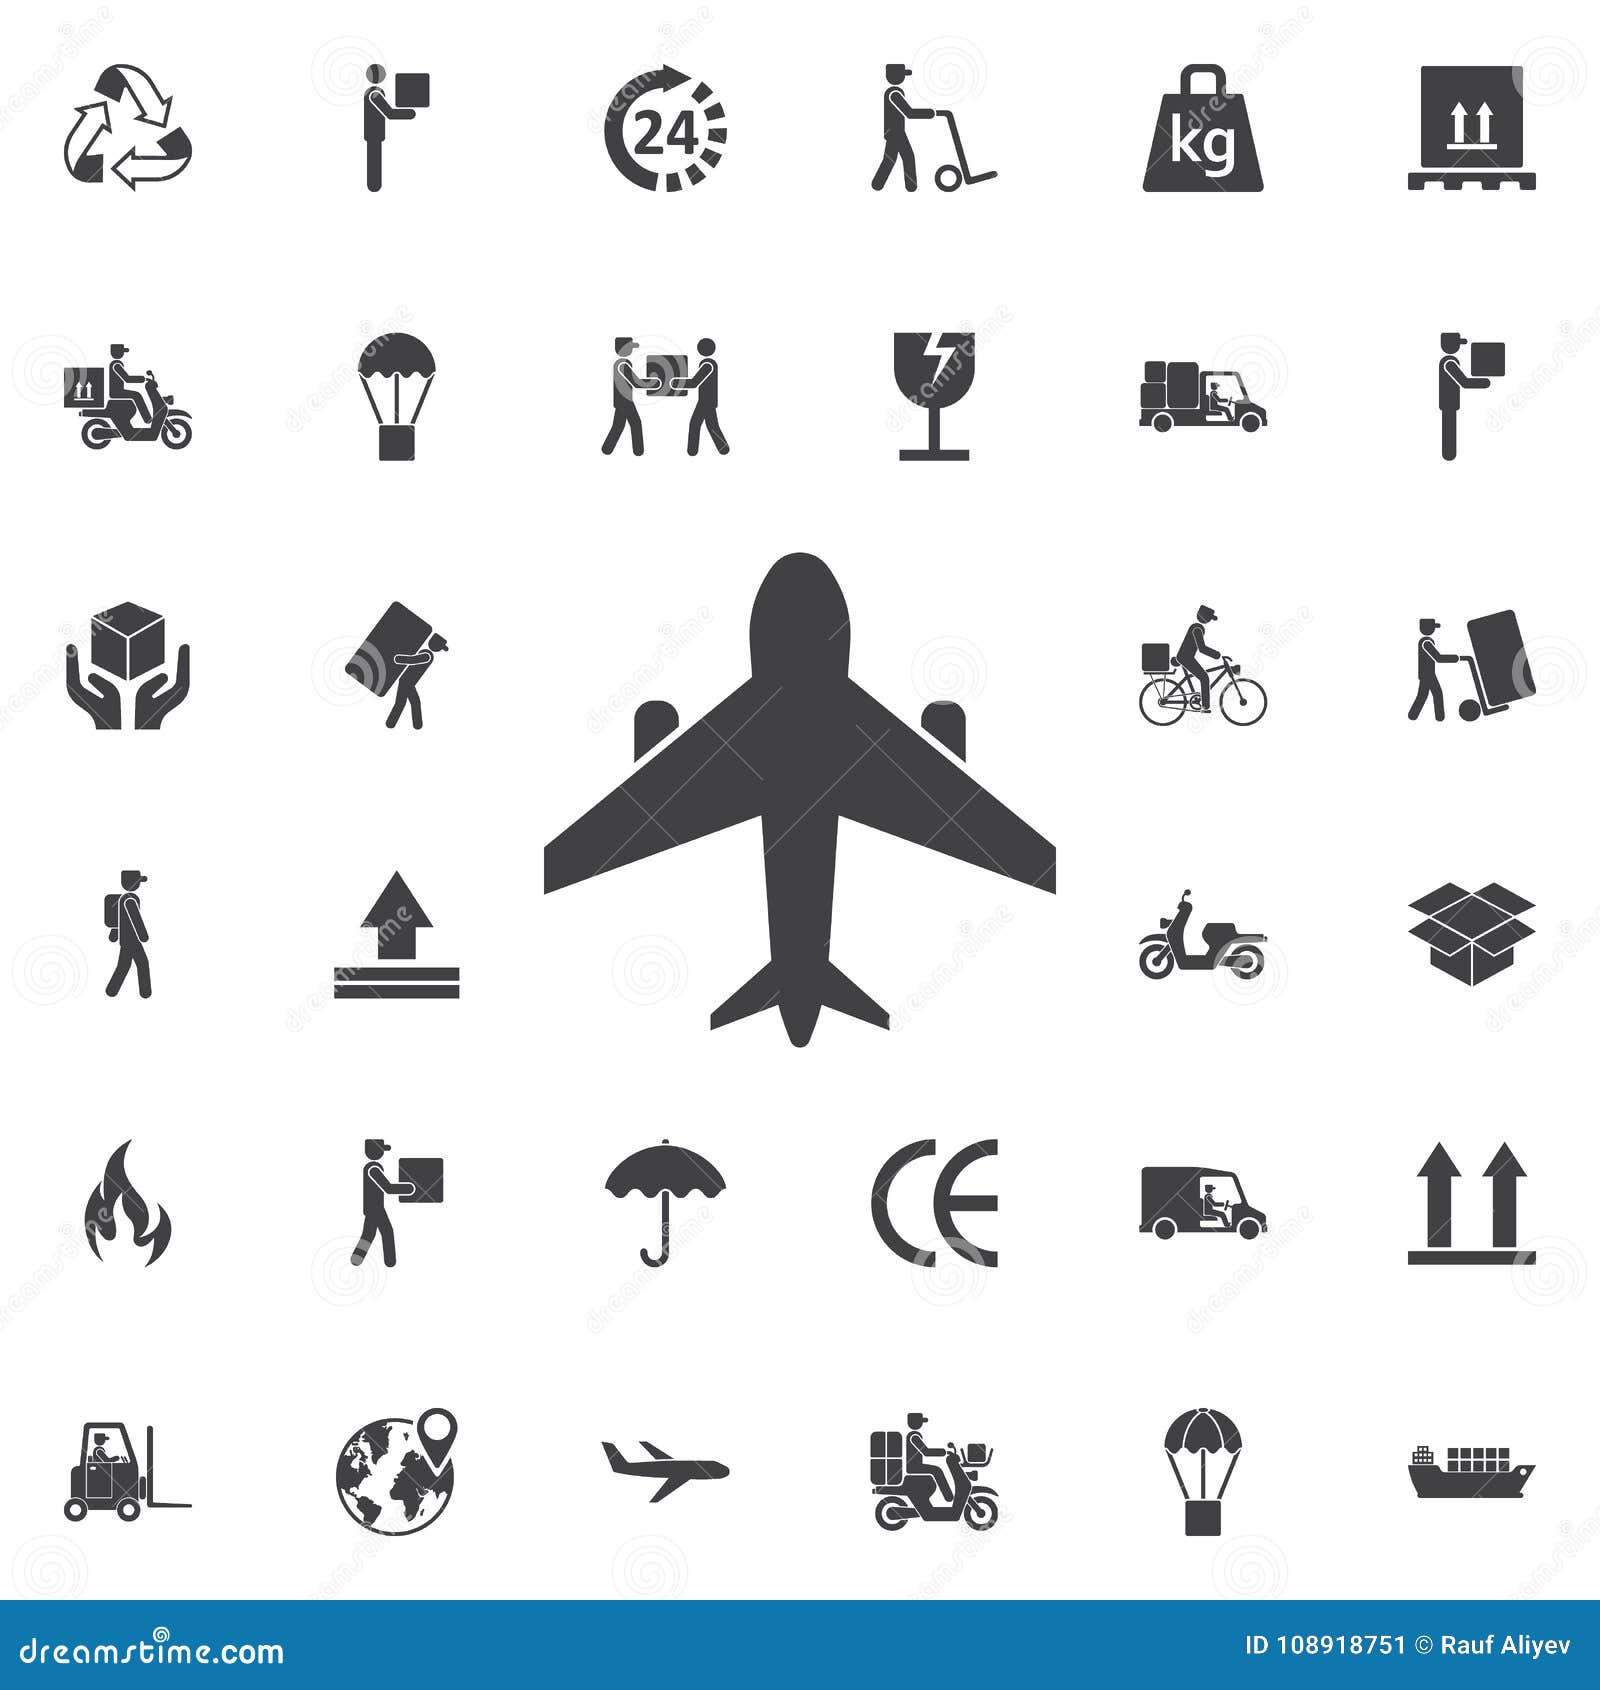 Plane icon vector stock illustration. Illustration of concept - 108918751